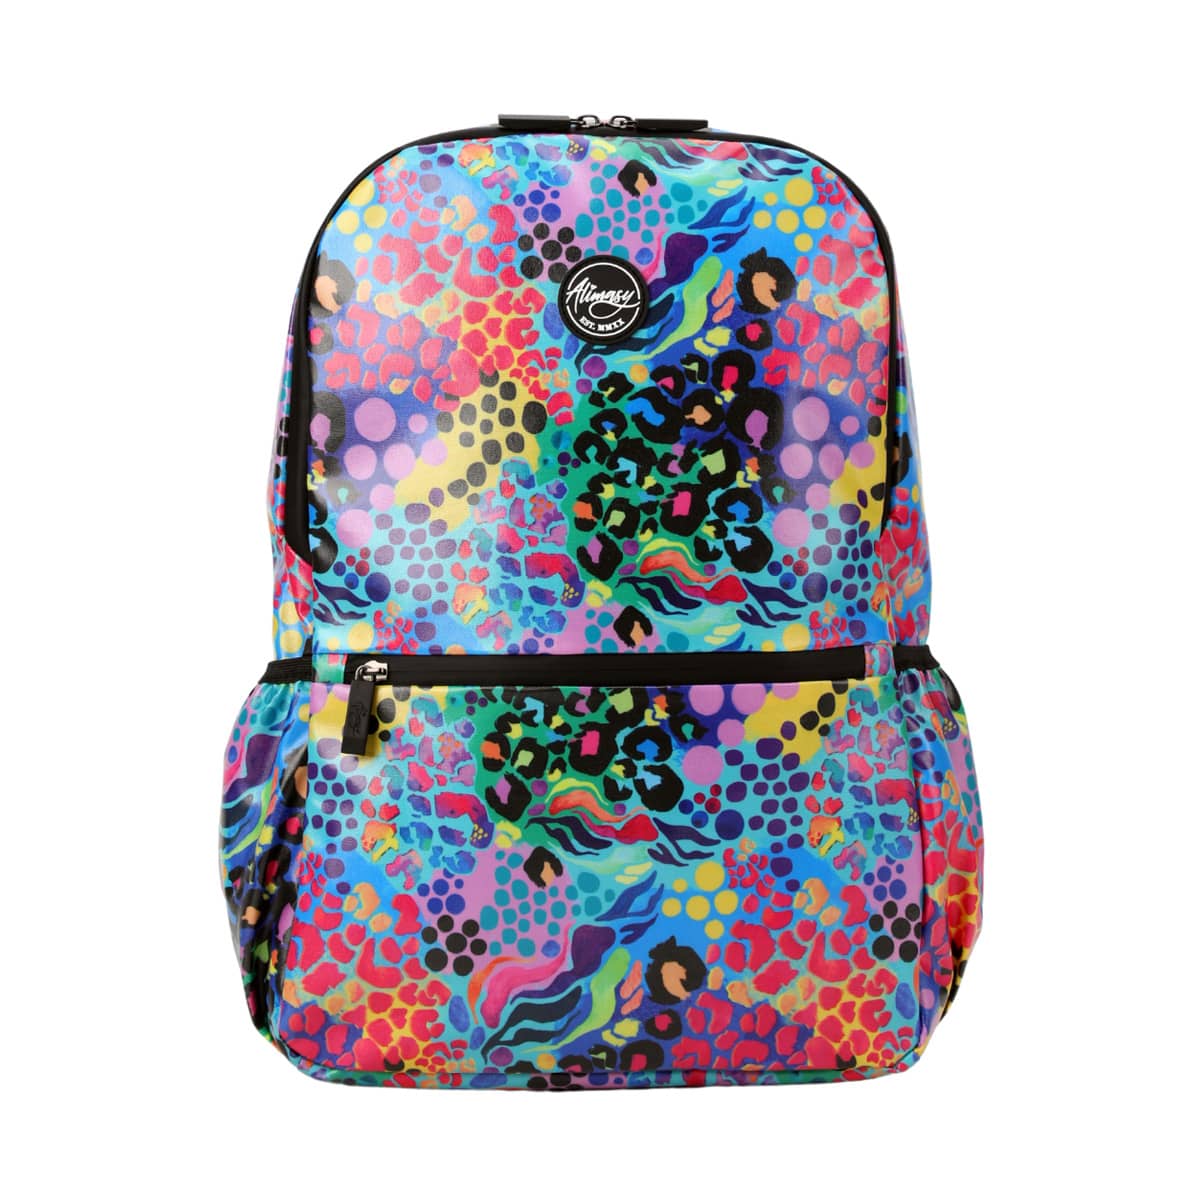 Alimasy Large Waterproof Backpack - Kasey Rainbow - Electric Leopard